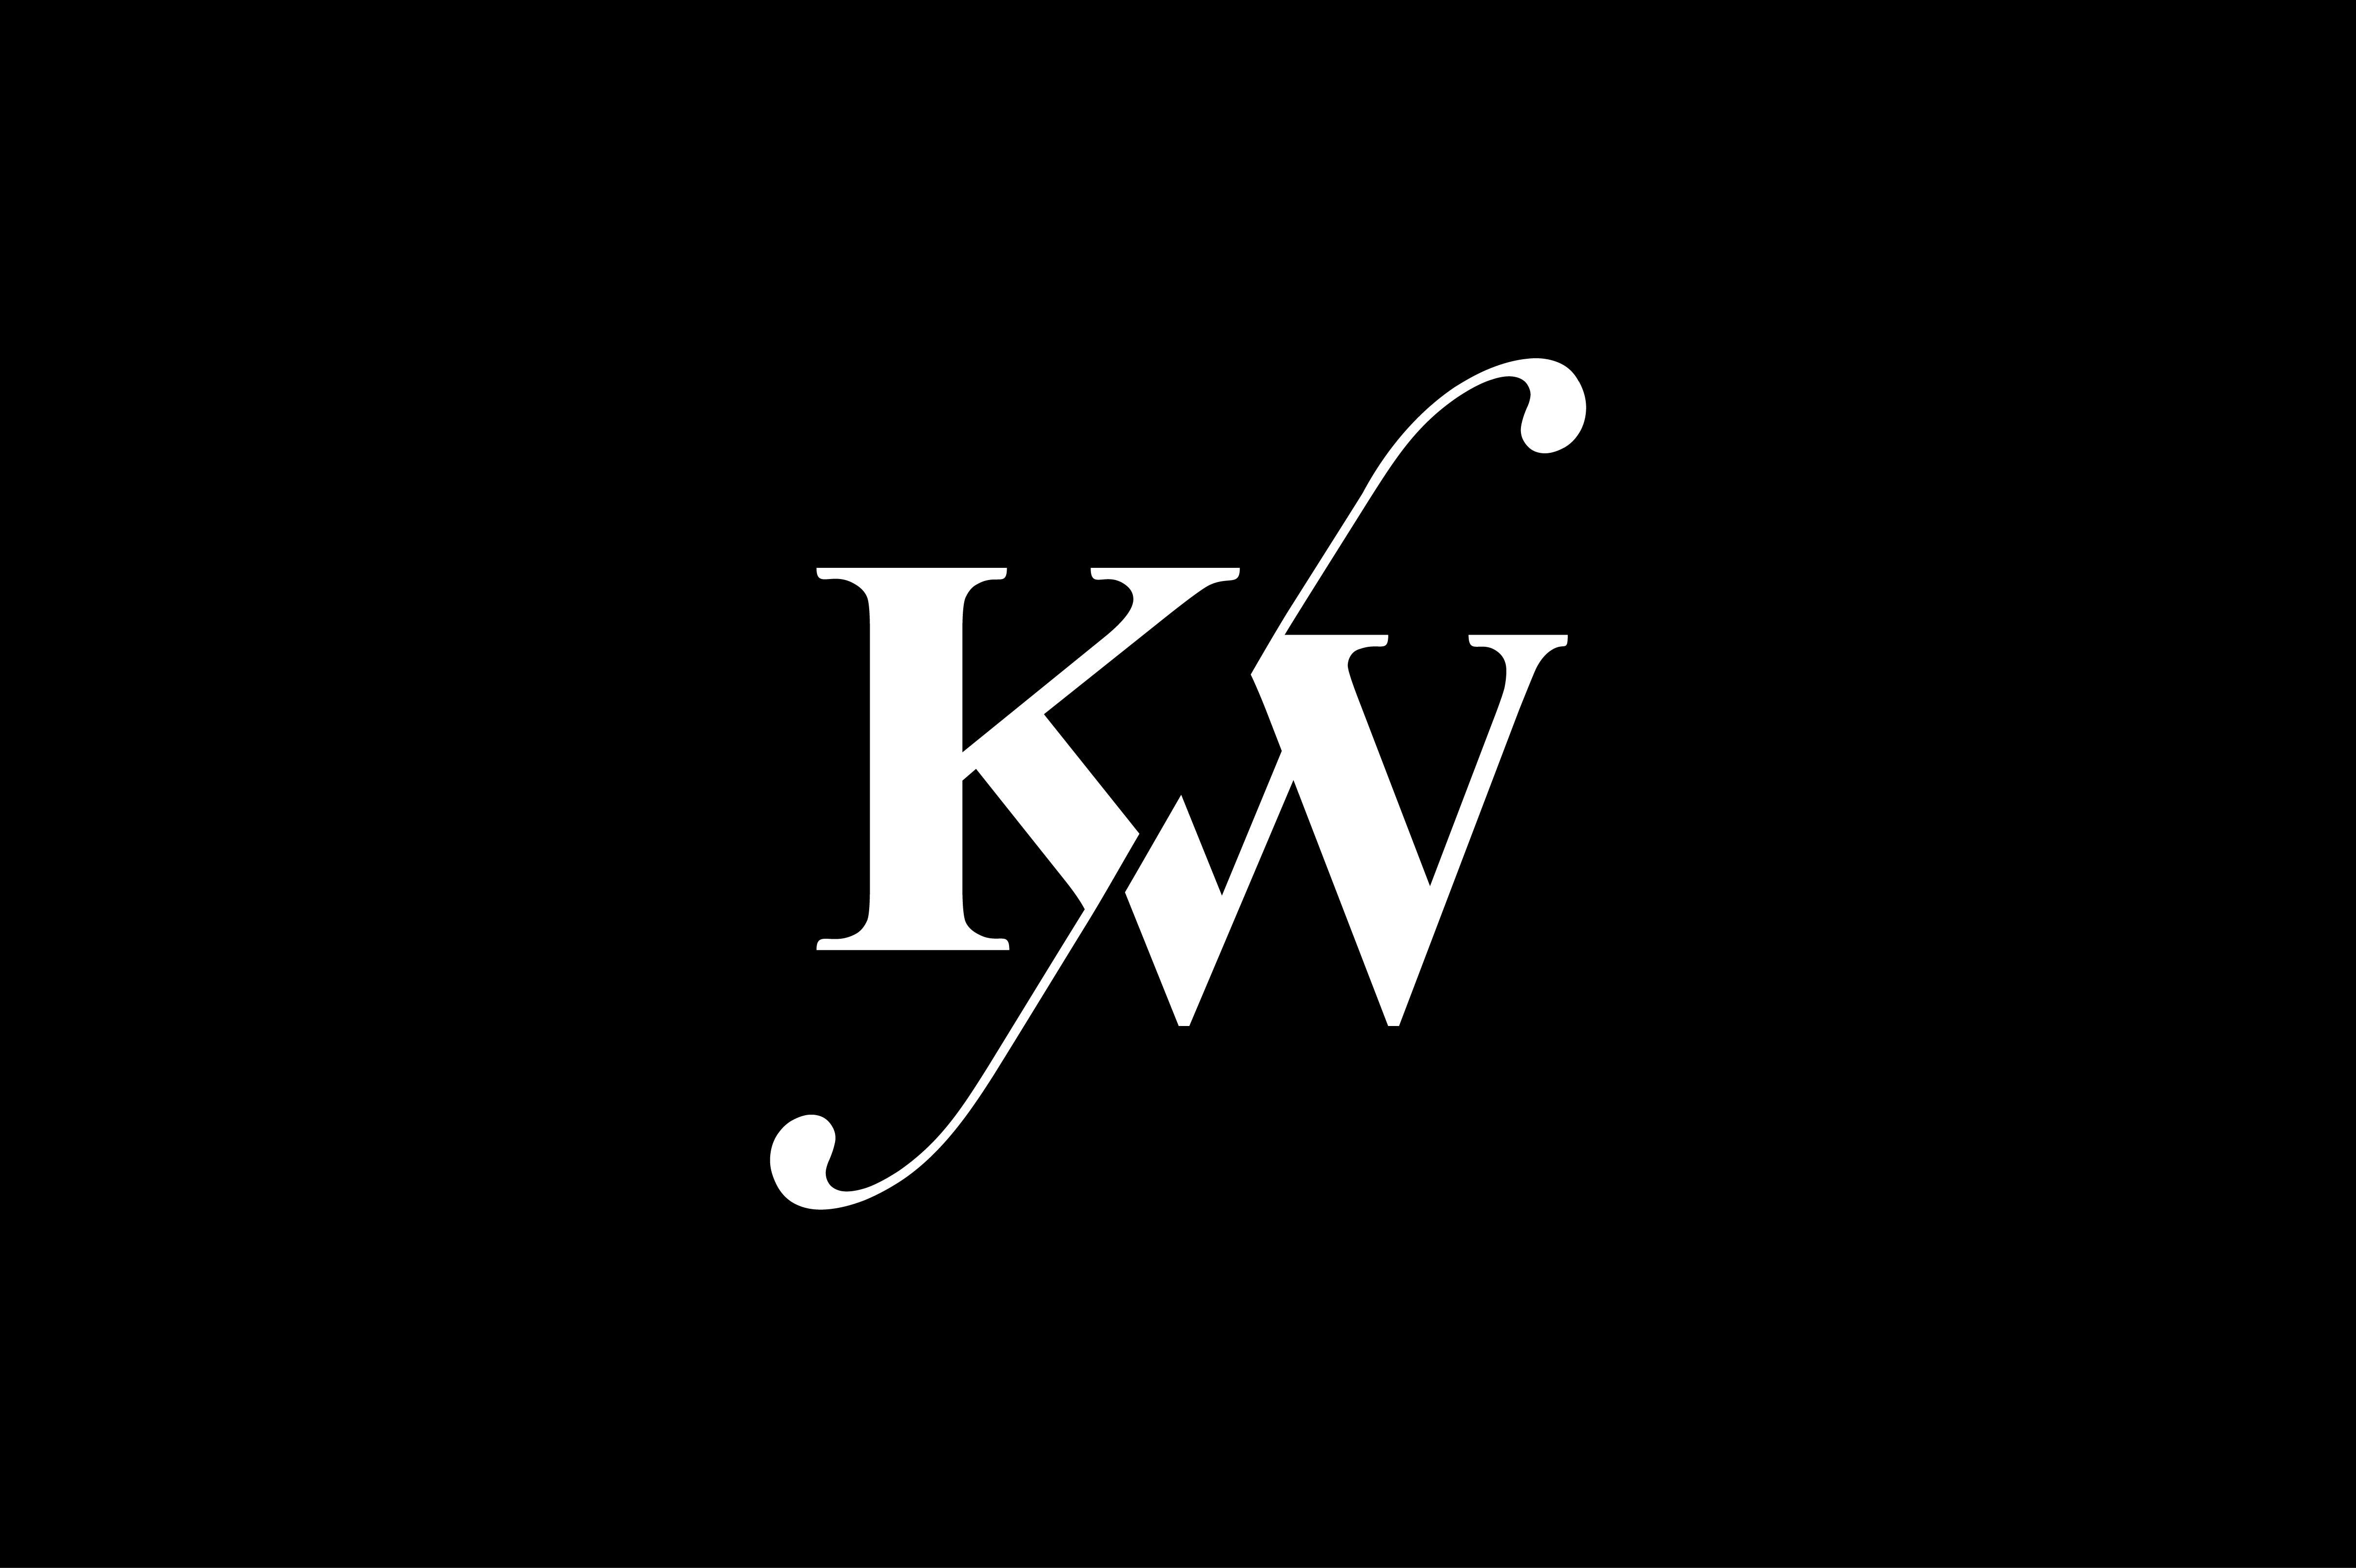 Kw Monogram Logo Design By Vectorseller Thehungryjpeg Com